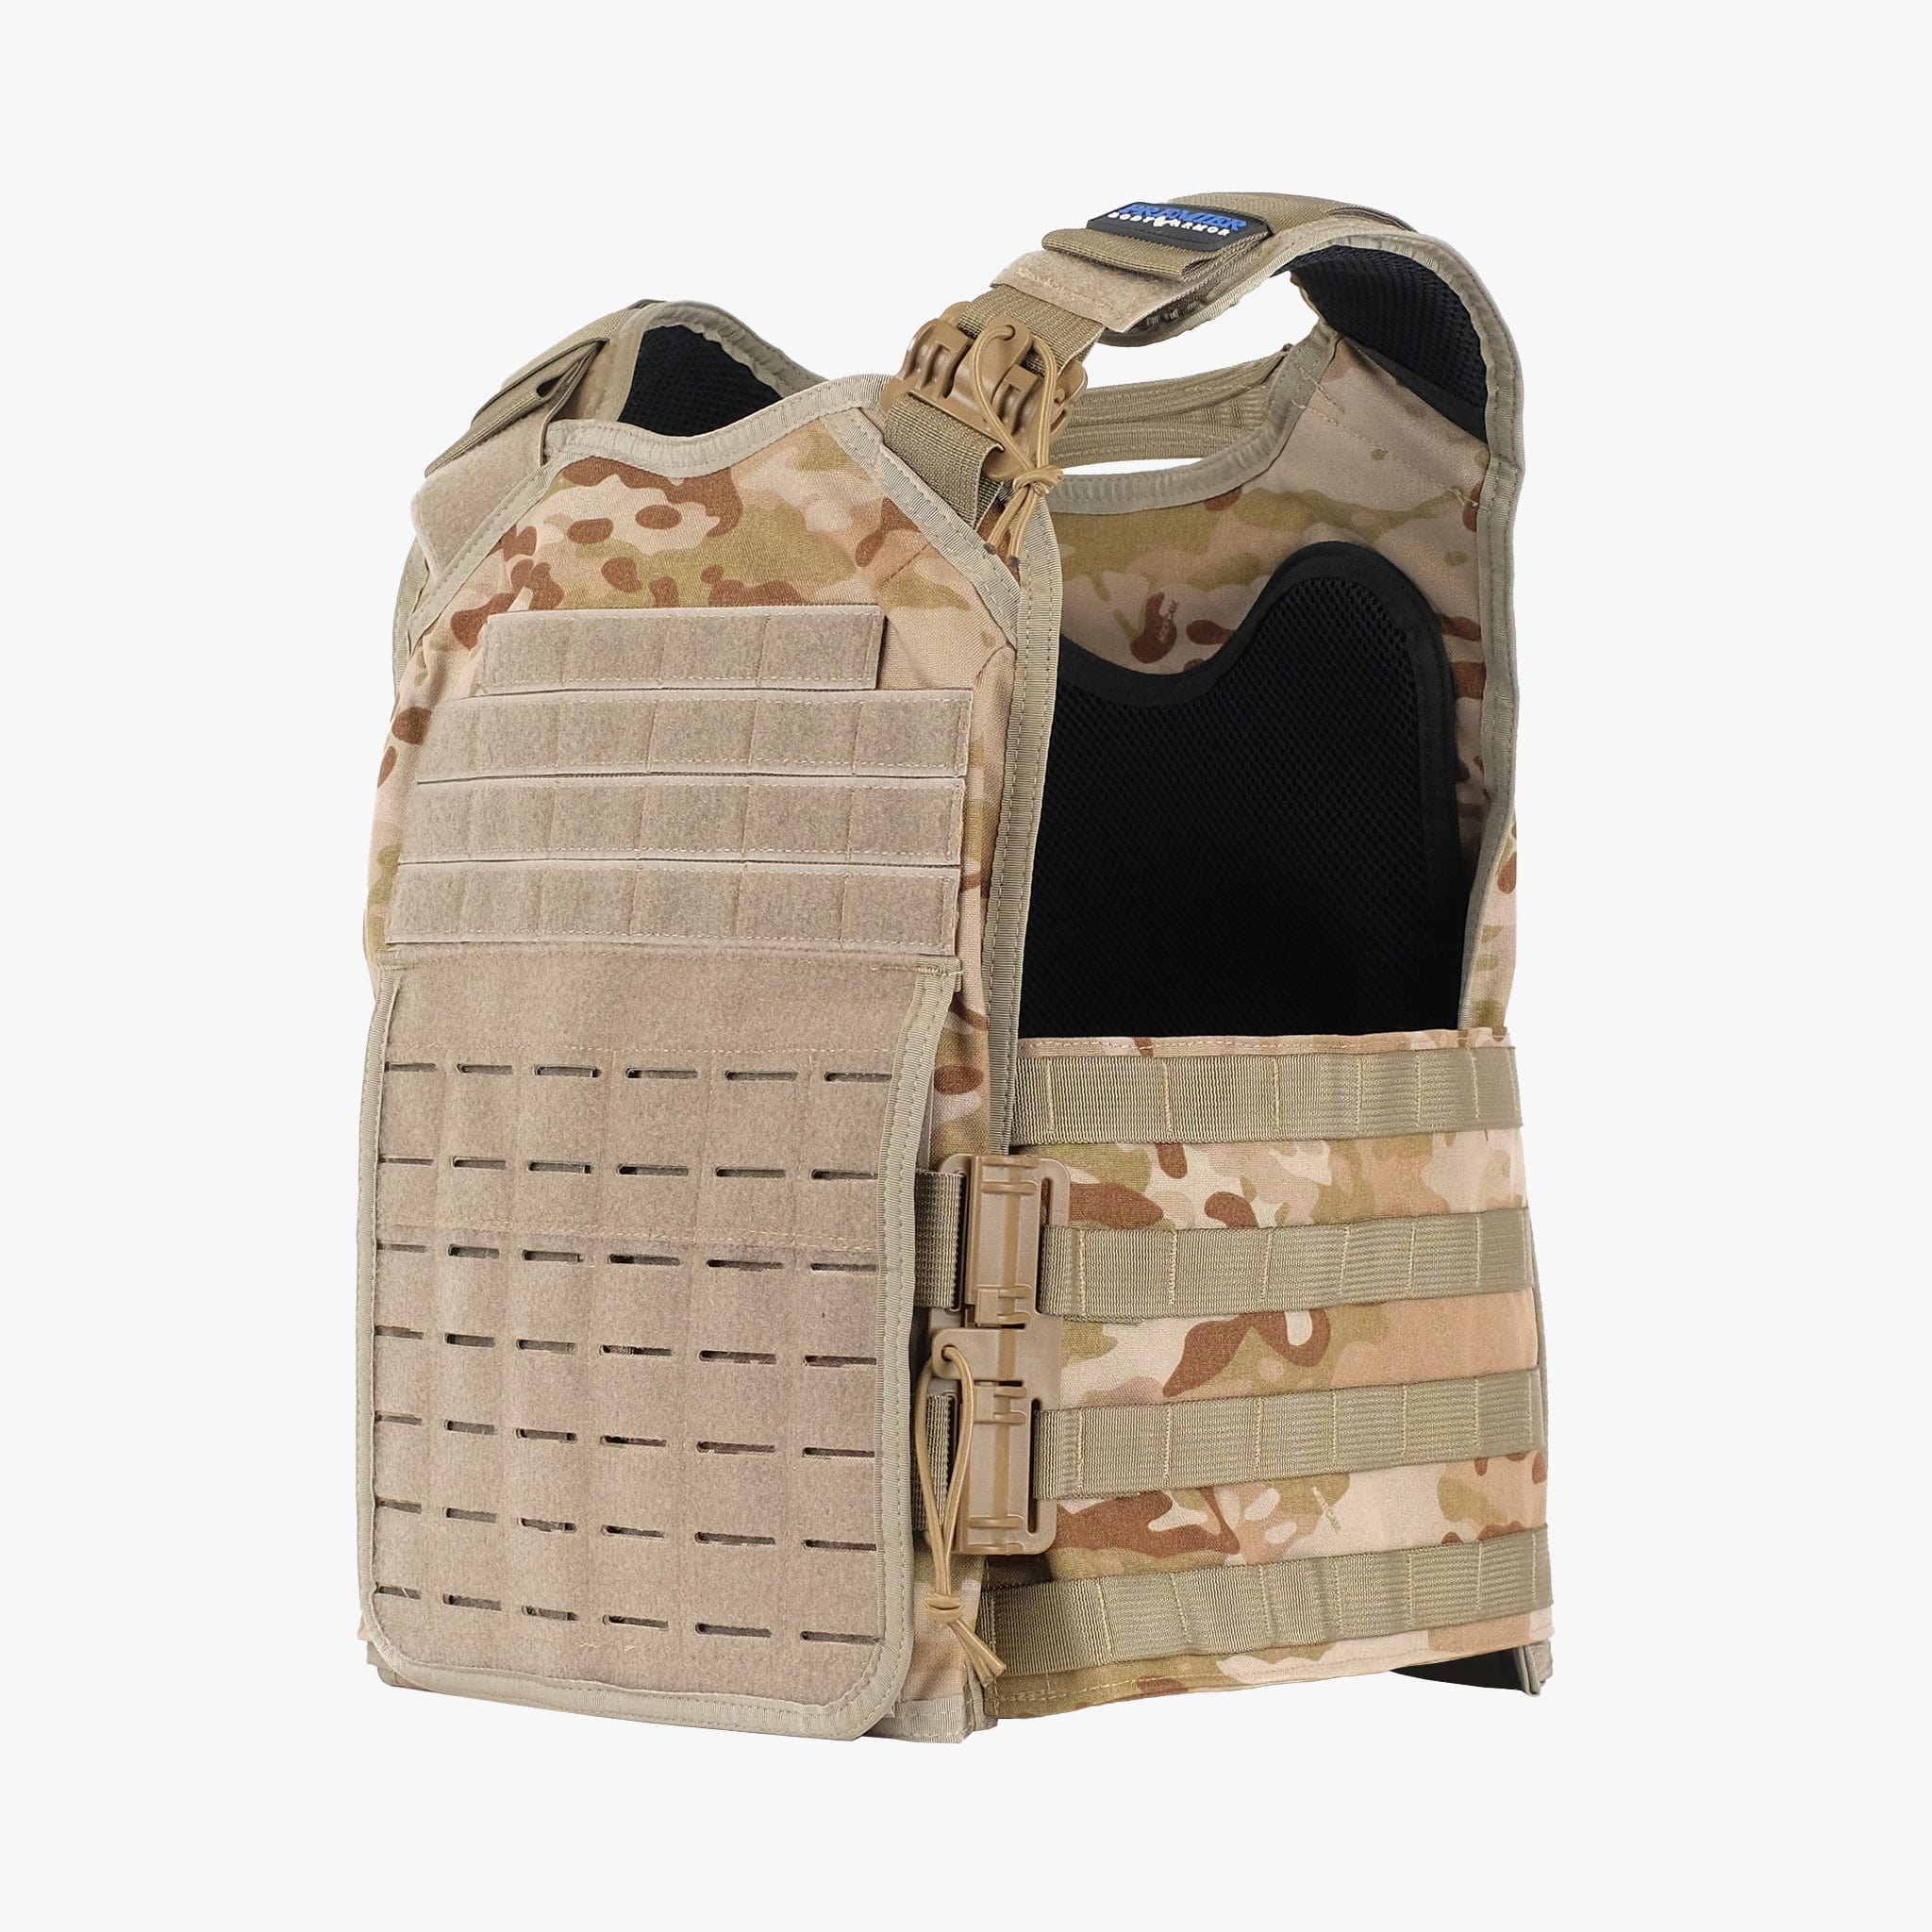 Shellback Tactical Banshee Rifle Level III Body Armor Kit with Model P5mmSAO Steel Plates